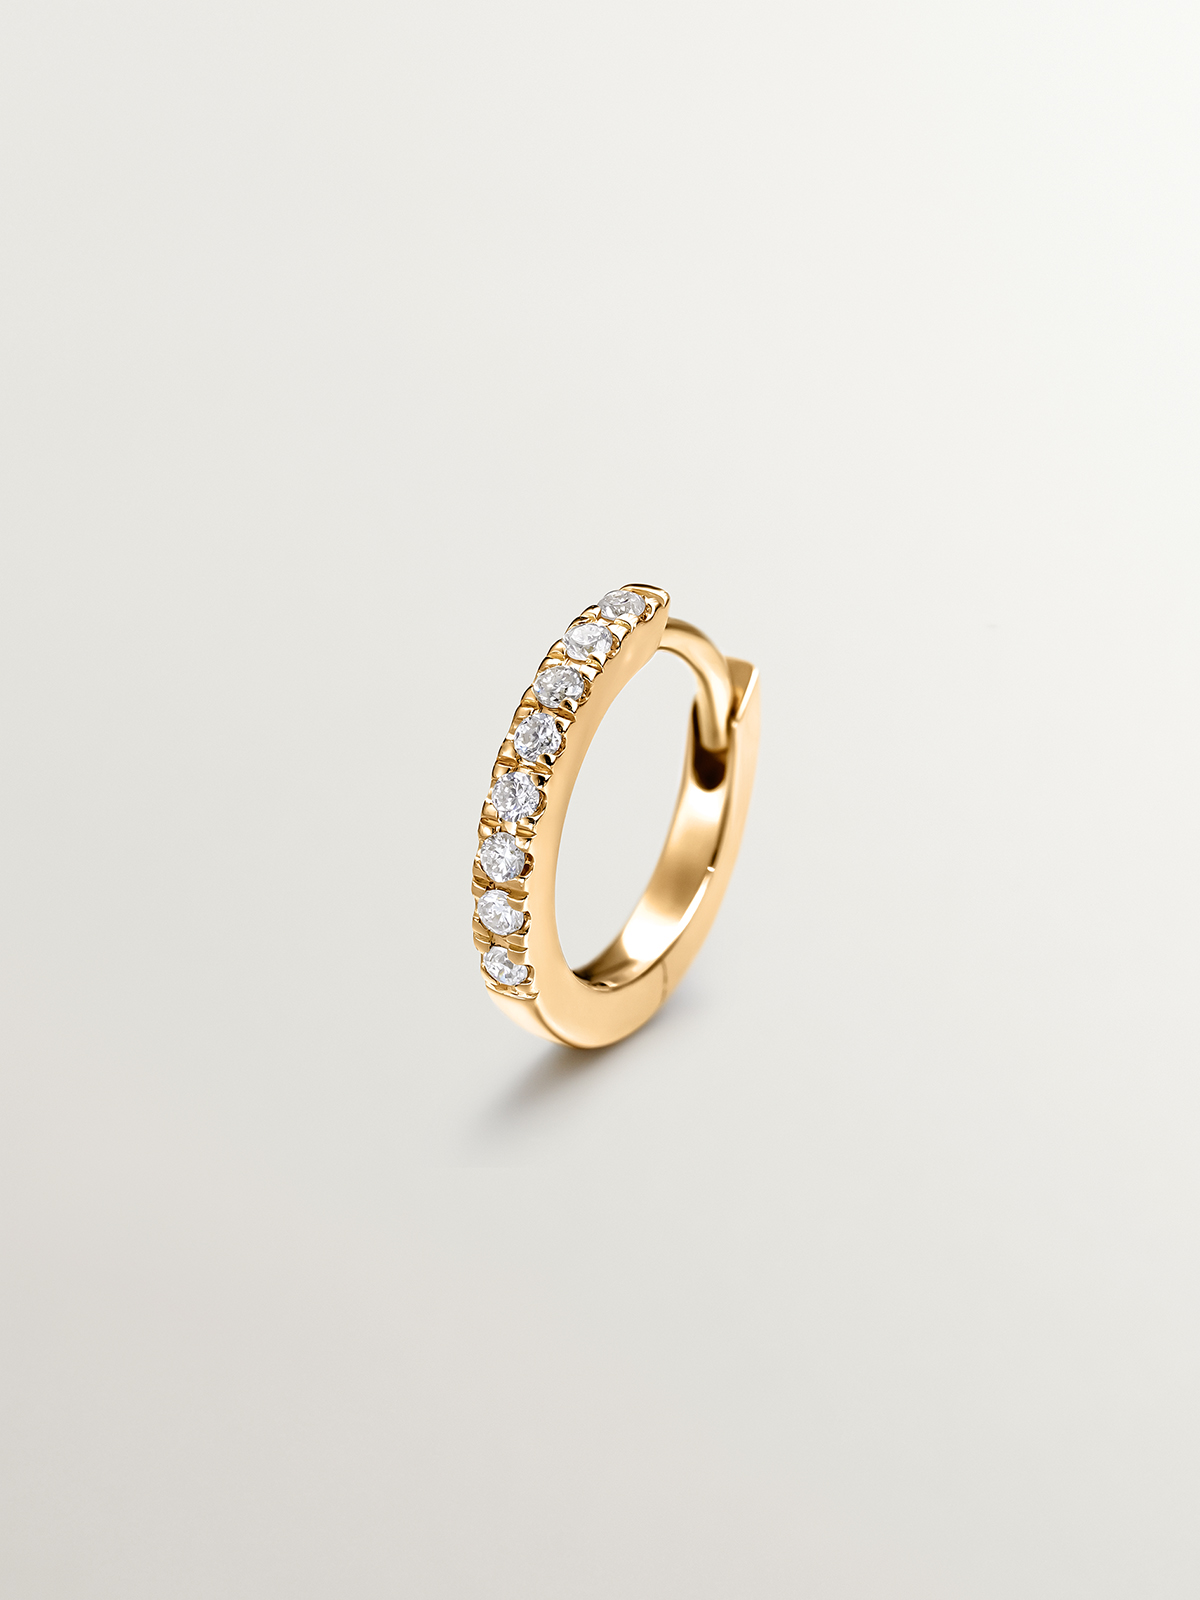 Individual 18K yellow gold hoop earring with diamonds